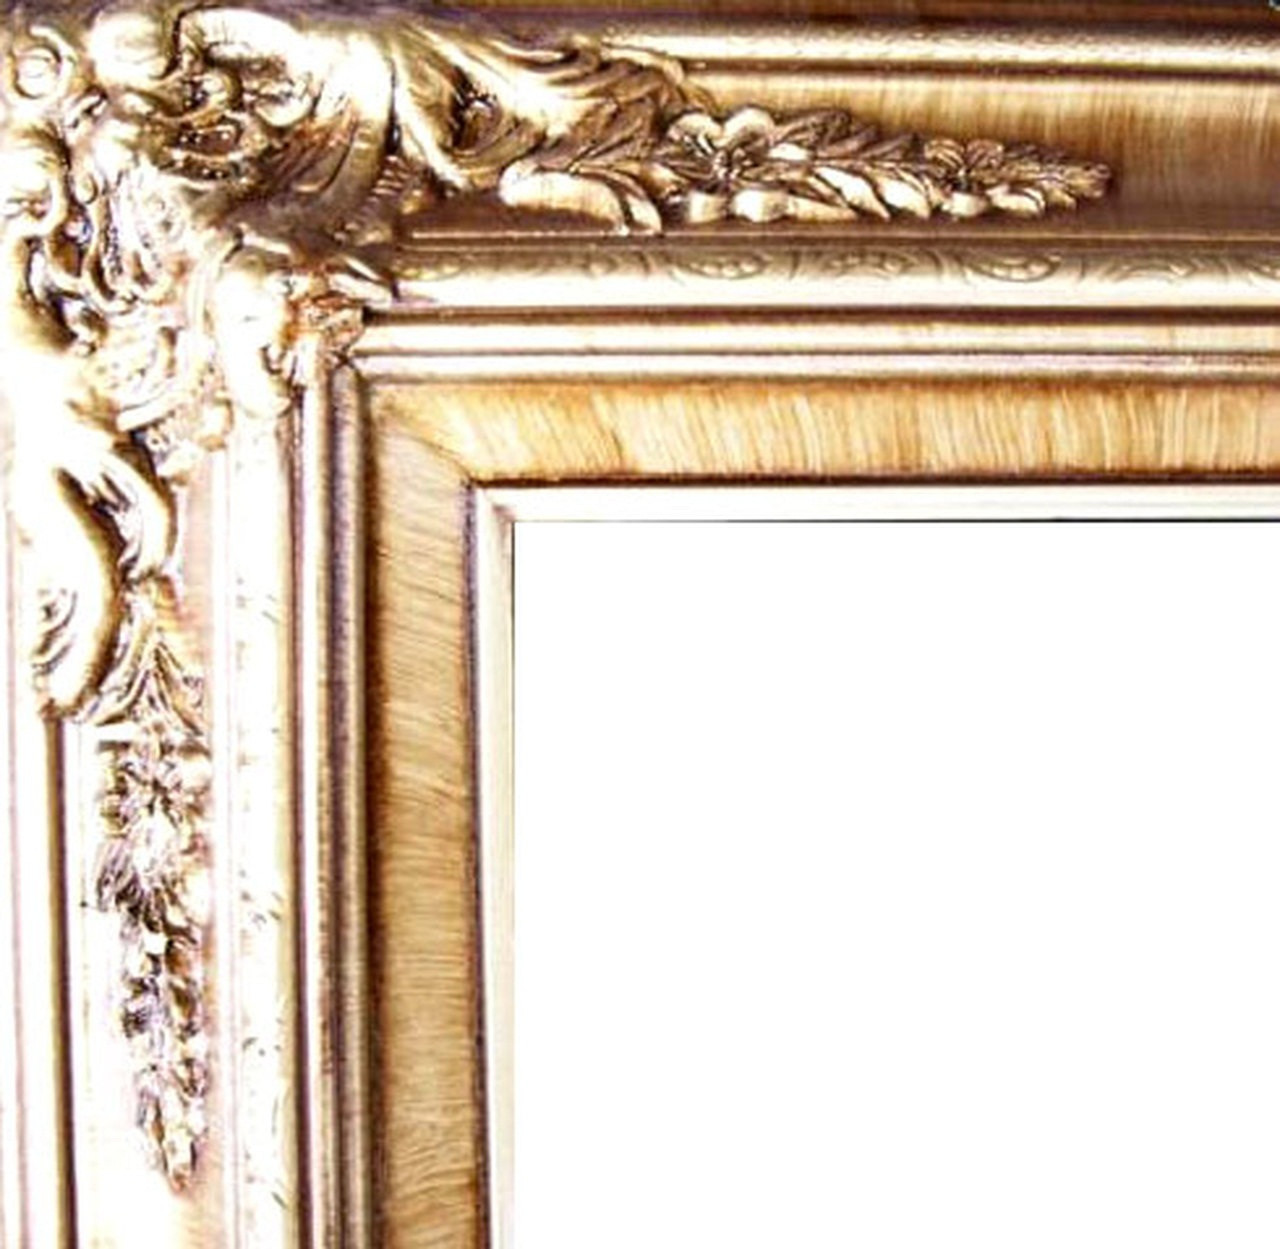 4" Ornate Wood Frames: 16X20